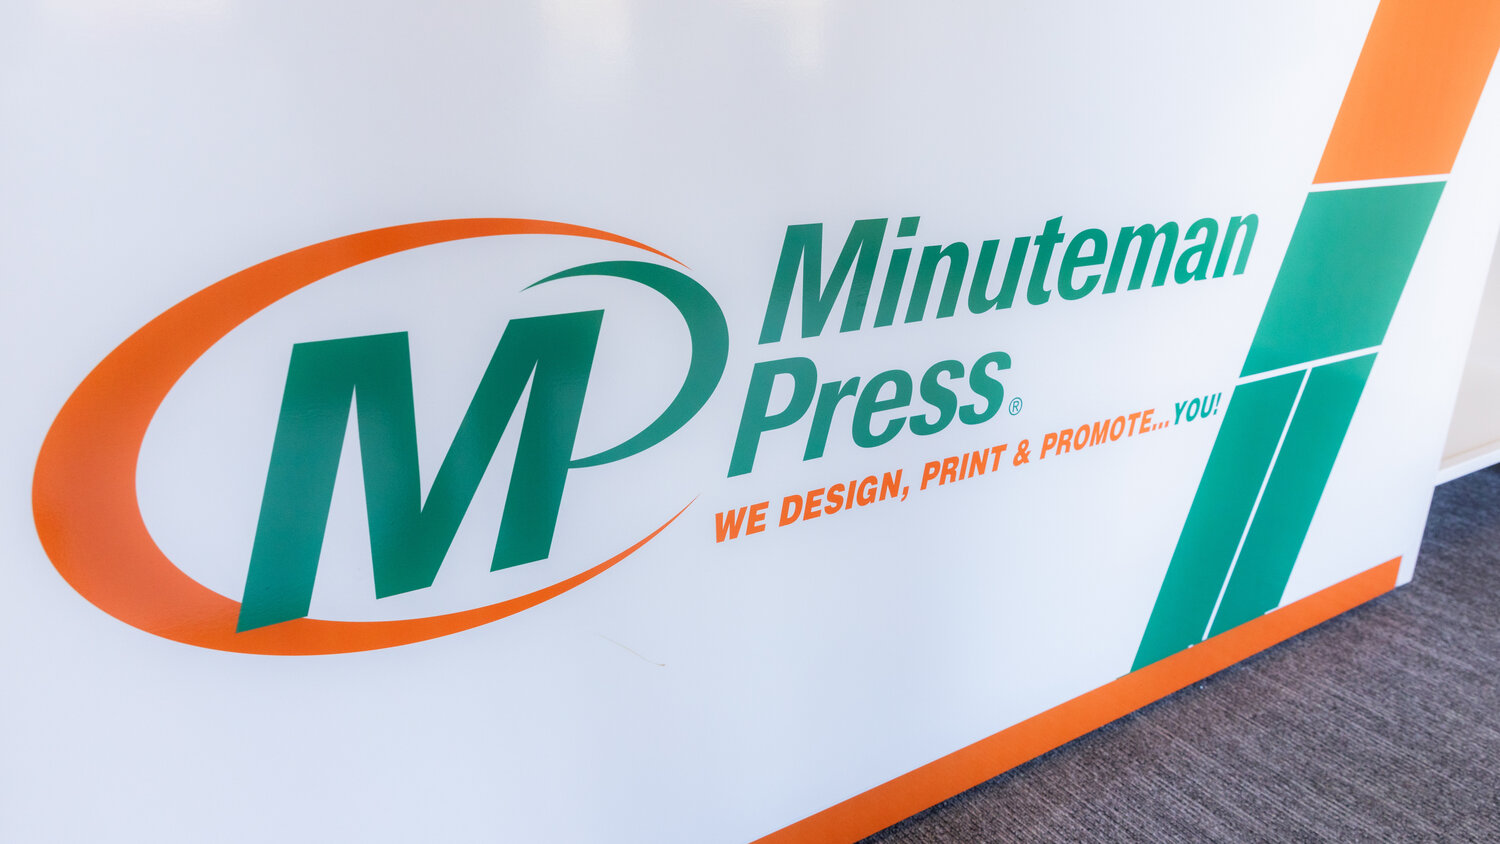 Minuteman Press is located at 151 NE Hampe Way B3-1 in Chehalis.